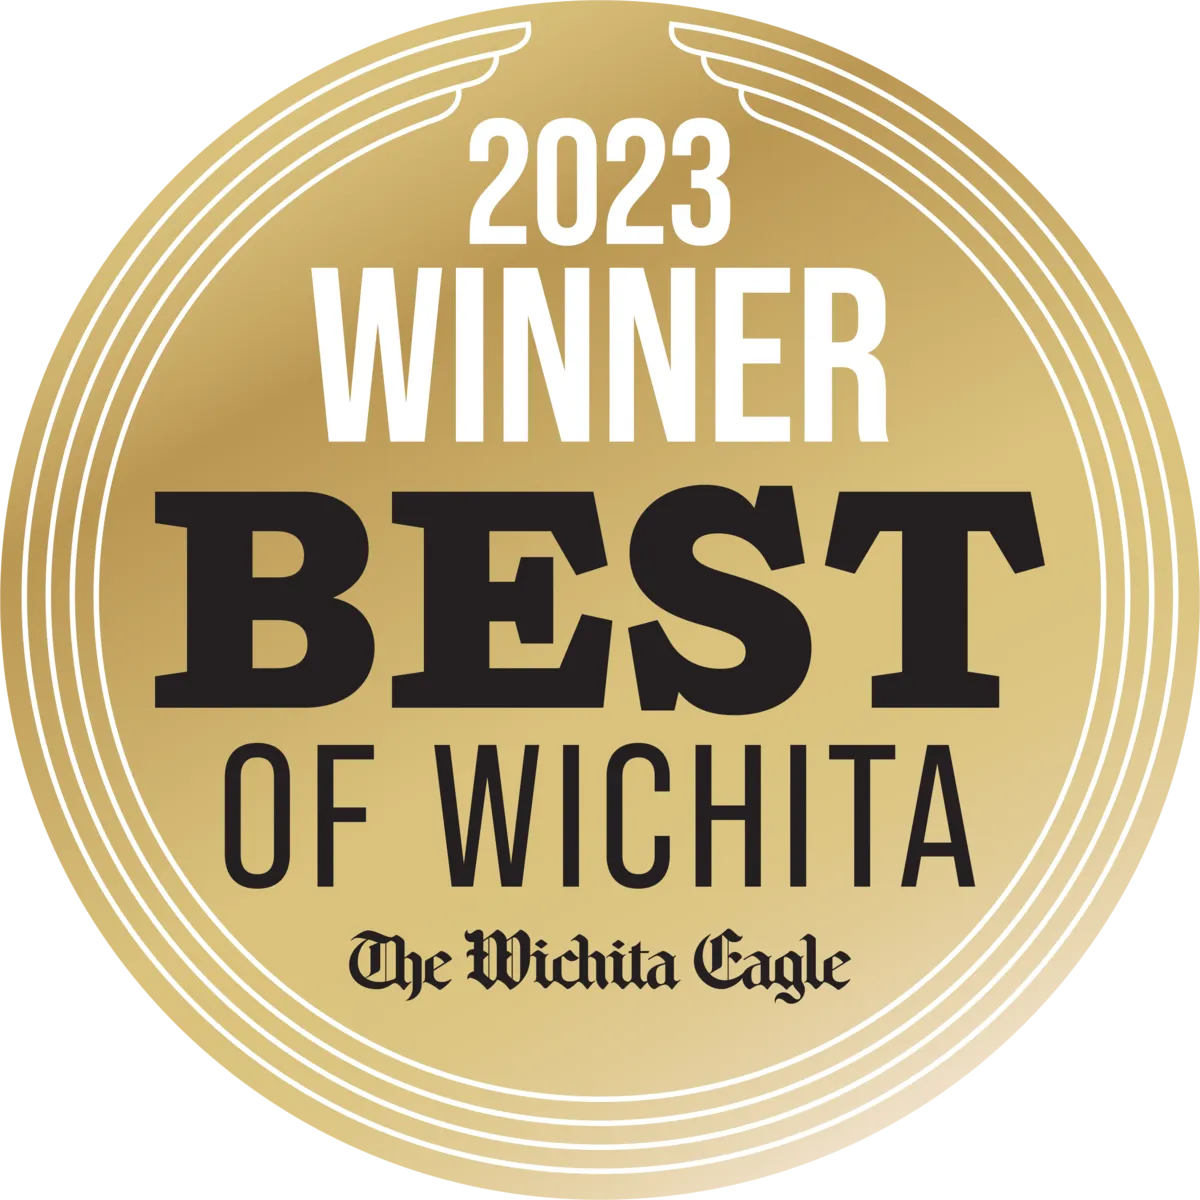 2023 Winner Best of Wichita The Wichita Eagle